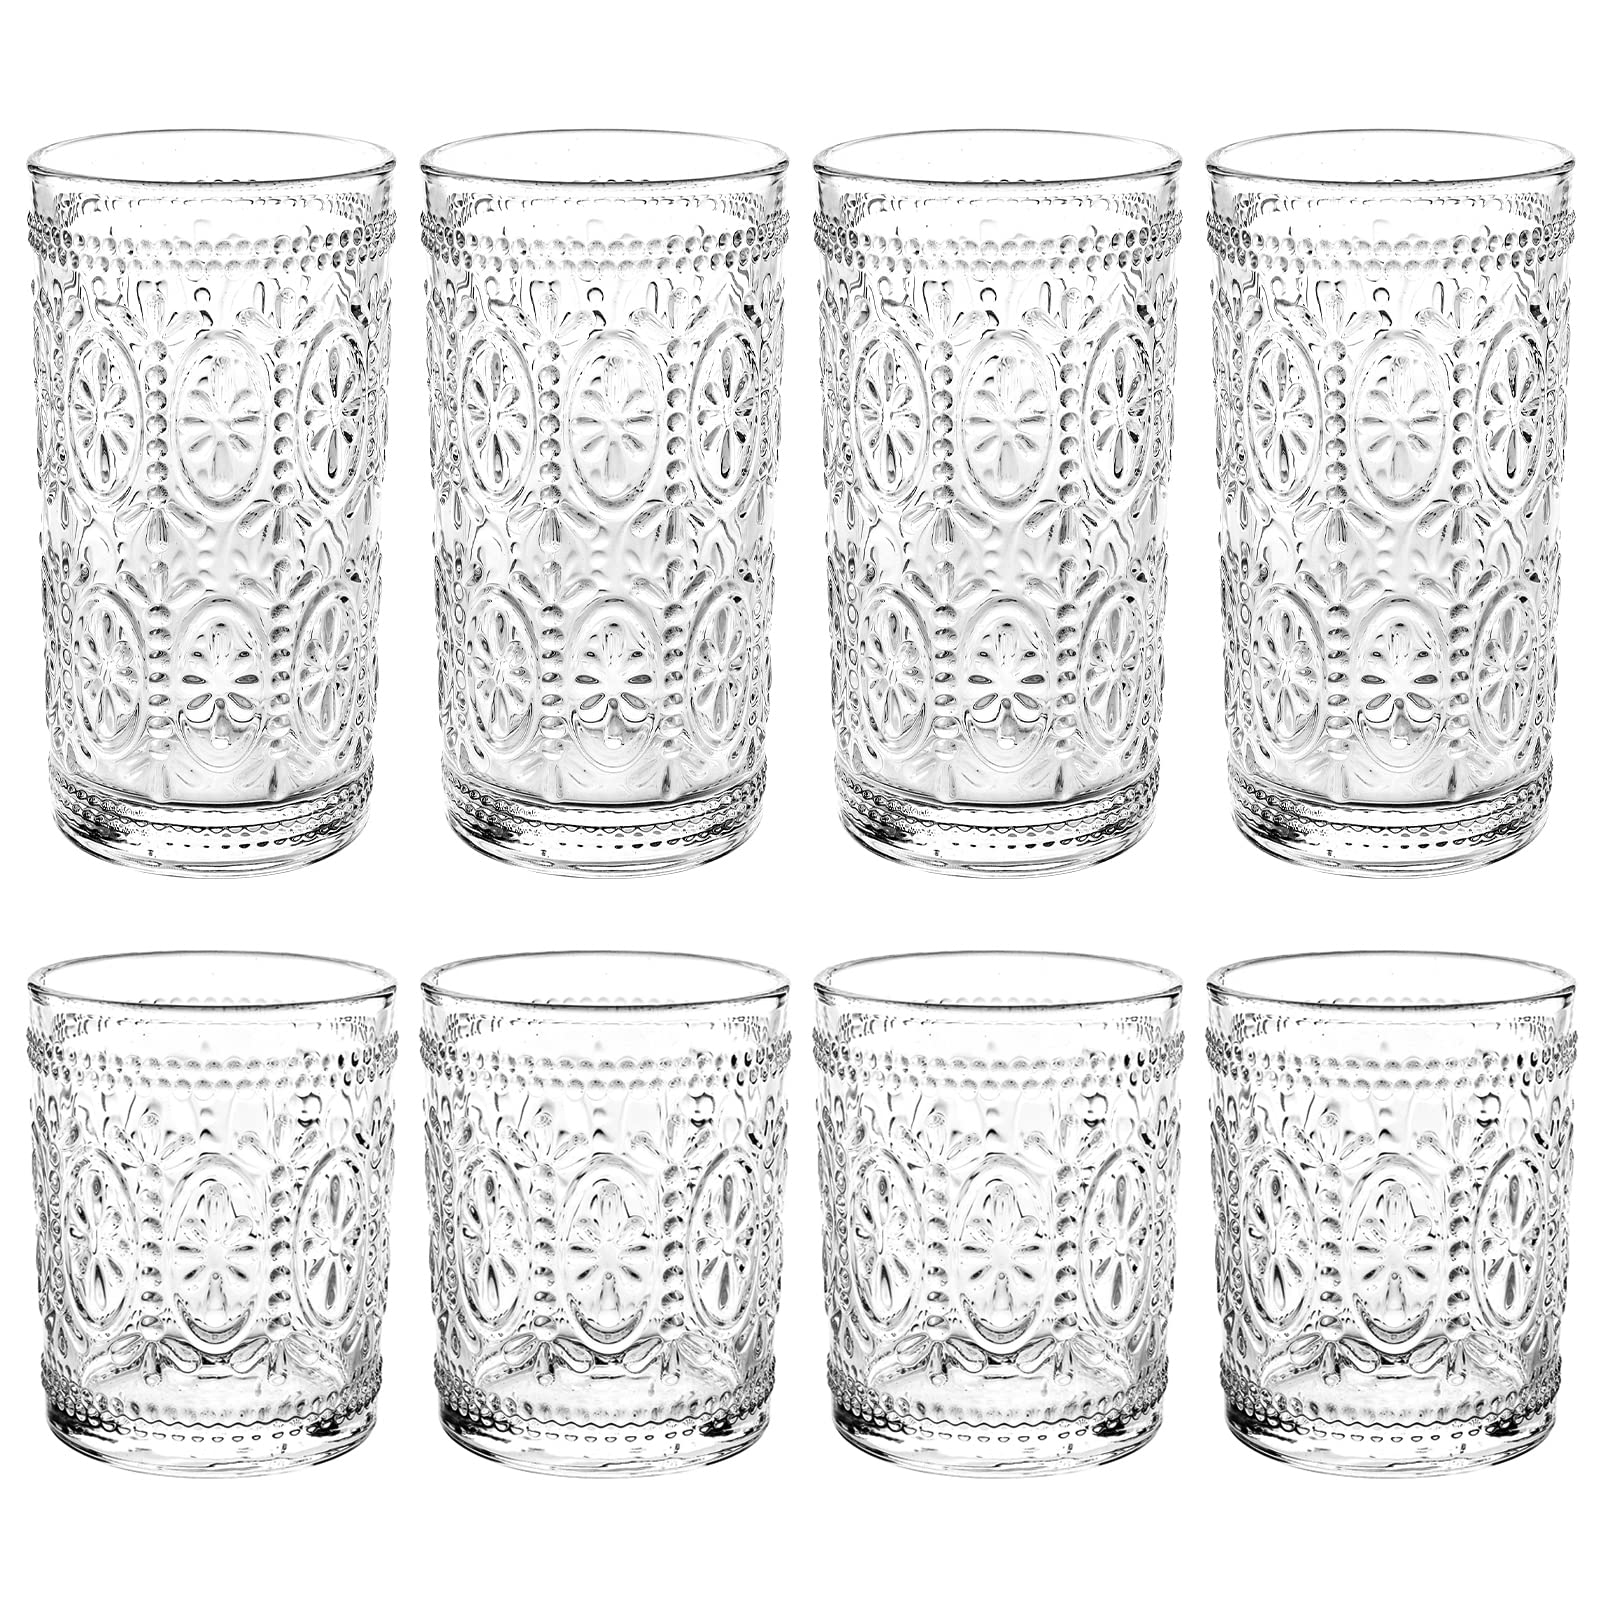 Bekith 8 Pack Drinking Glasses, 4 Highball Glasses (12 oz) and 4 Rocks Glasses (10oz), Romantic Water Glasses Tumblers, Vintage Glassware Set for Beverages, Beer, Juice, Cocktail